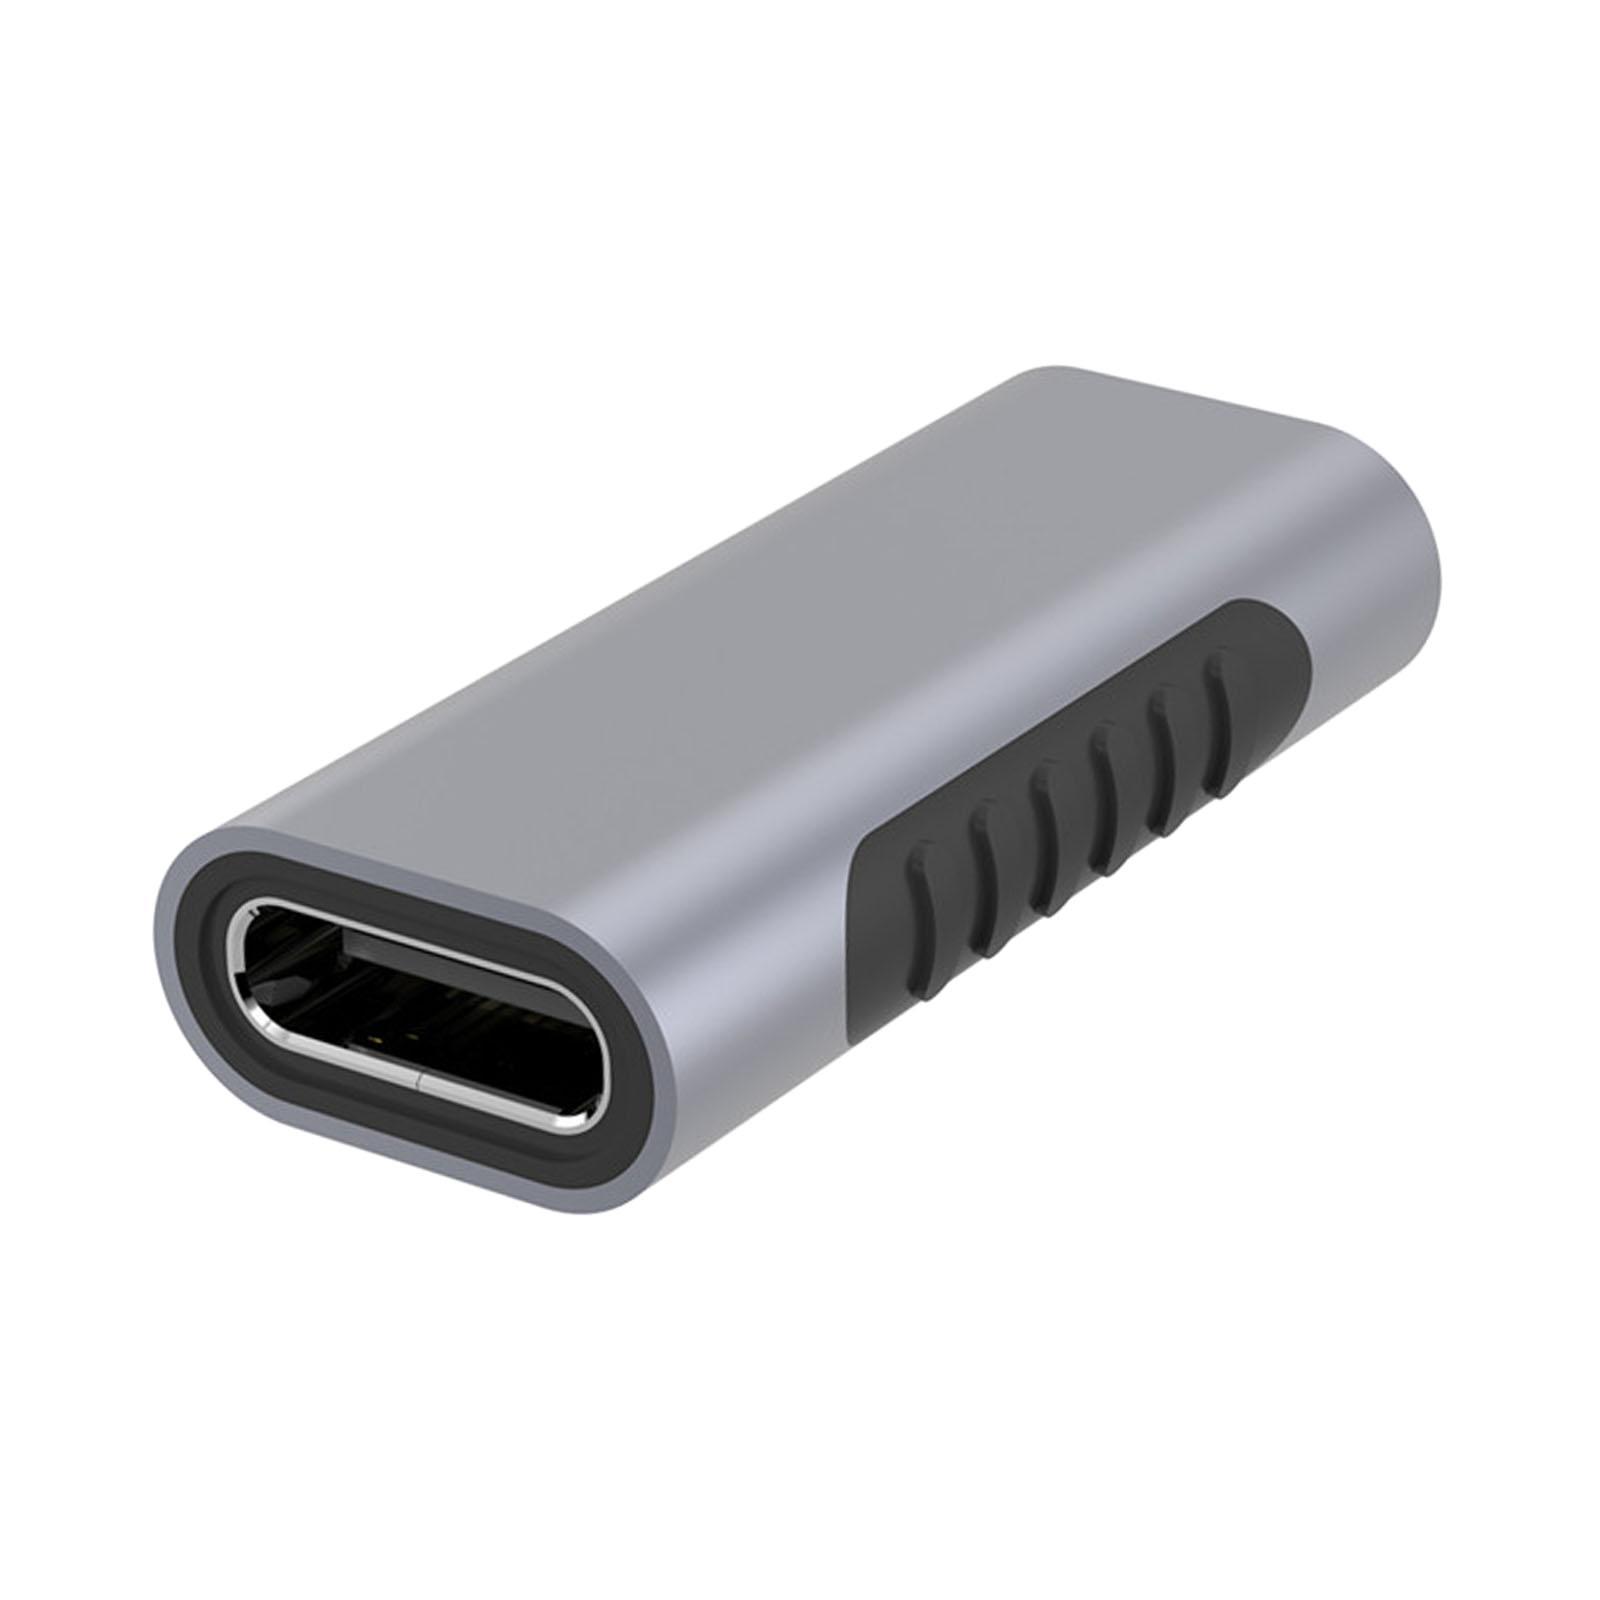 Mini USB Type .1 Female to USB C Female Adapter Converter for Tablet